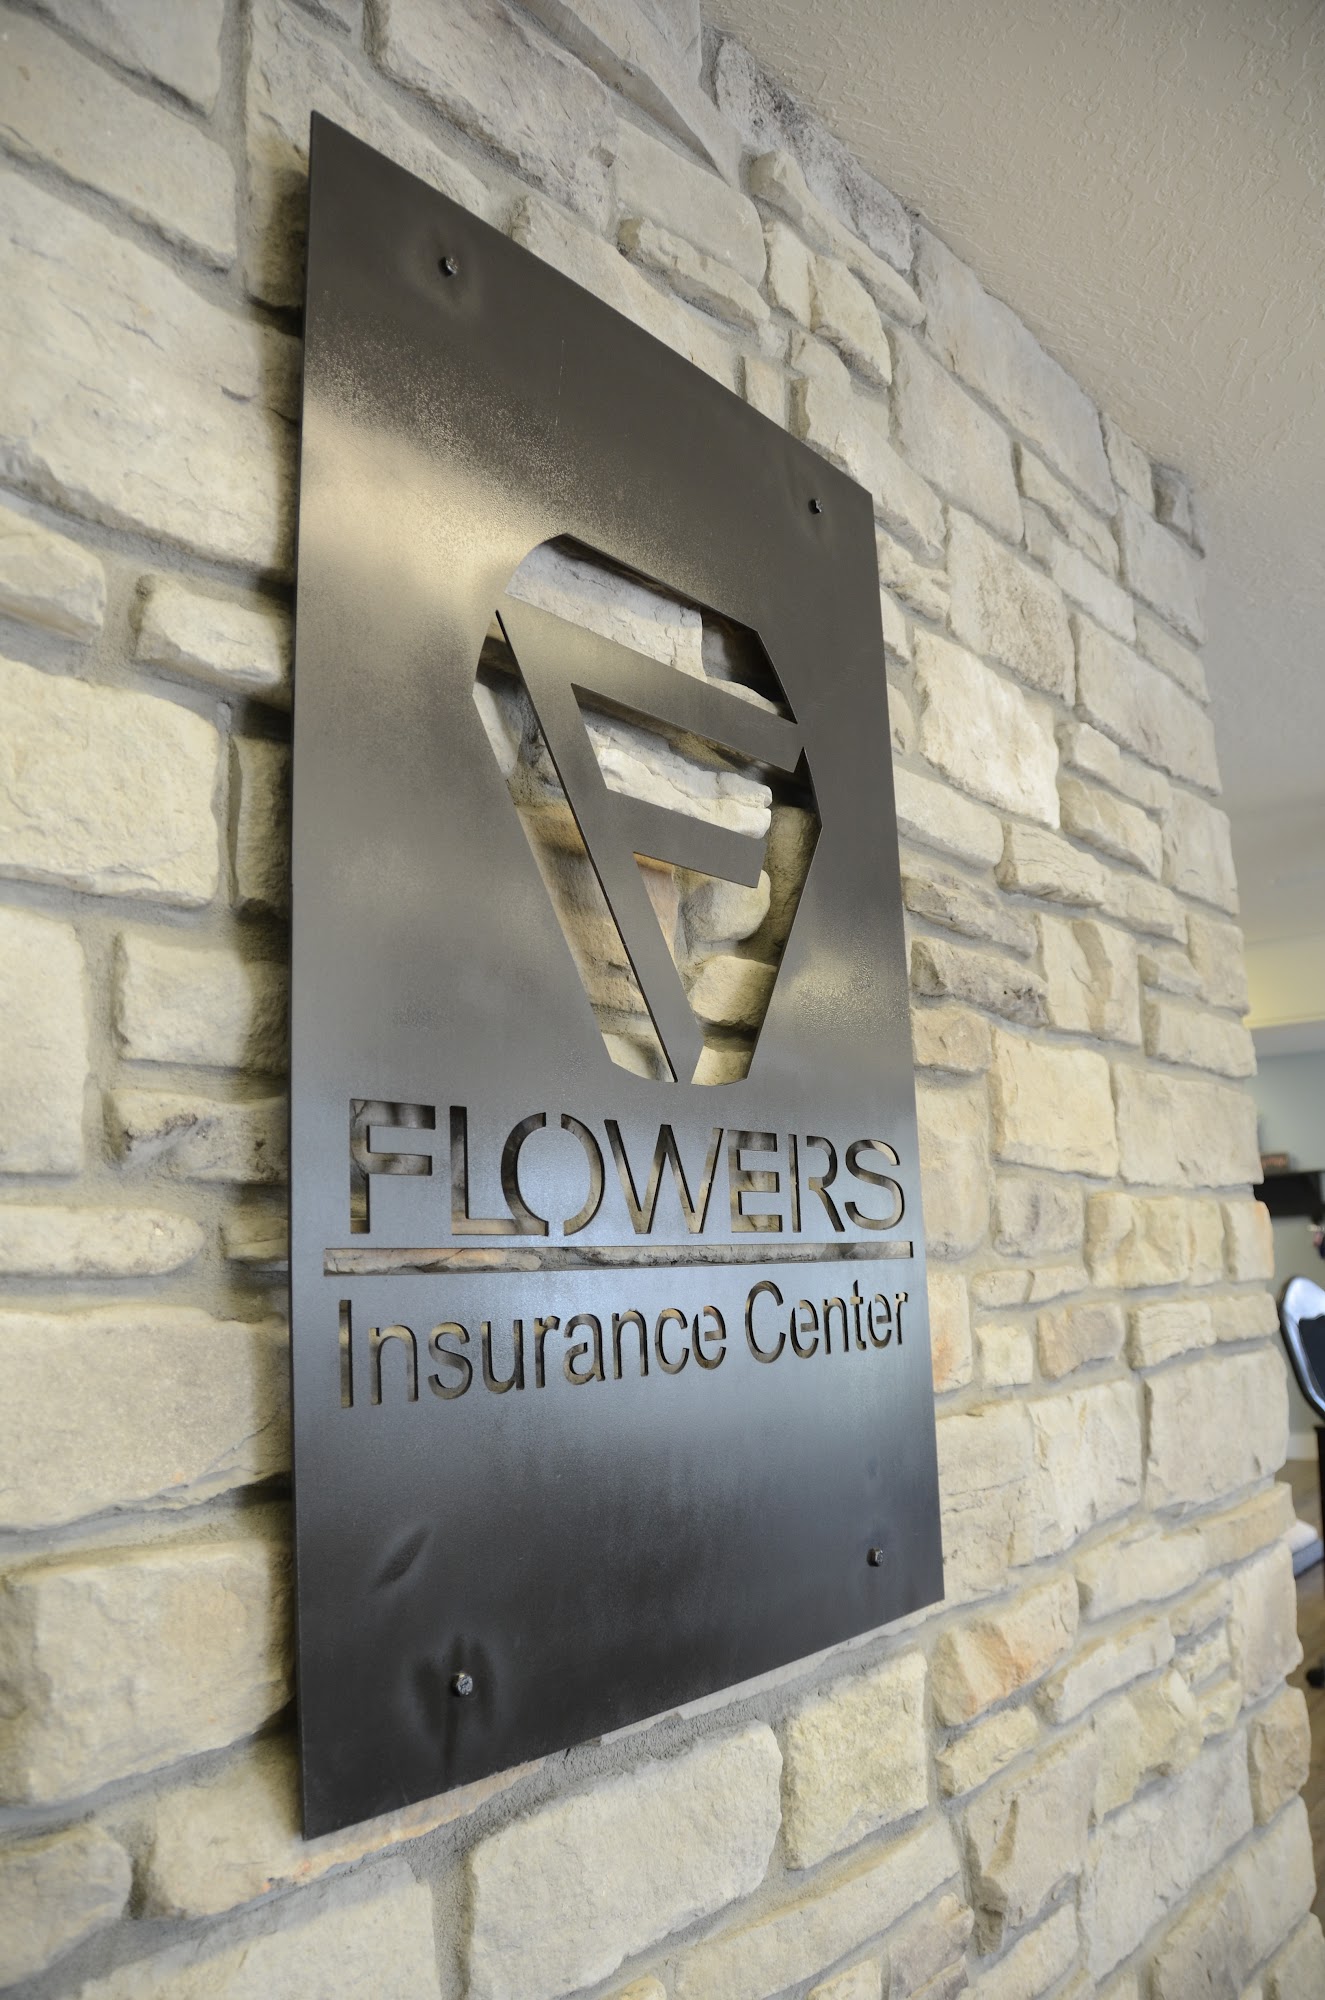 Flowers Insurance Center 915 N 8th St, Vandalia Illinois 62471